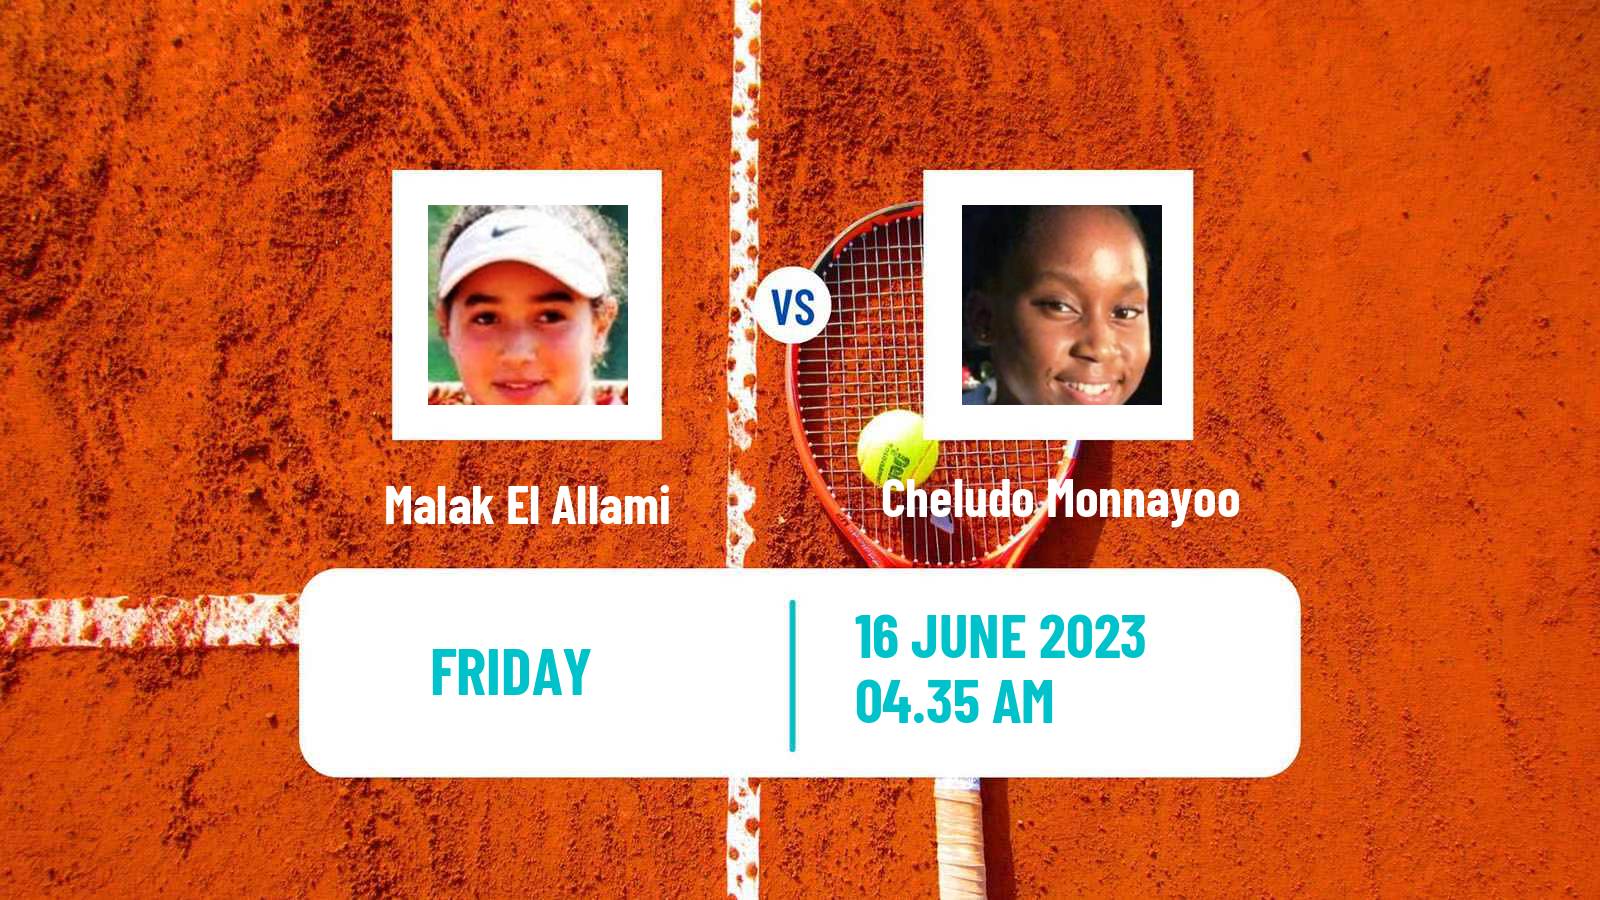 Tennis WTA Billie Jean King Cup Group III Malak El Allami - Cheludo Monnayoo